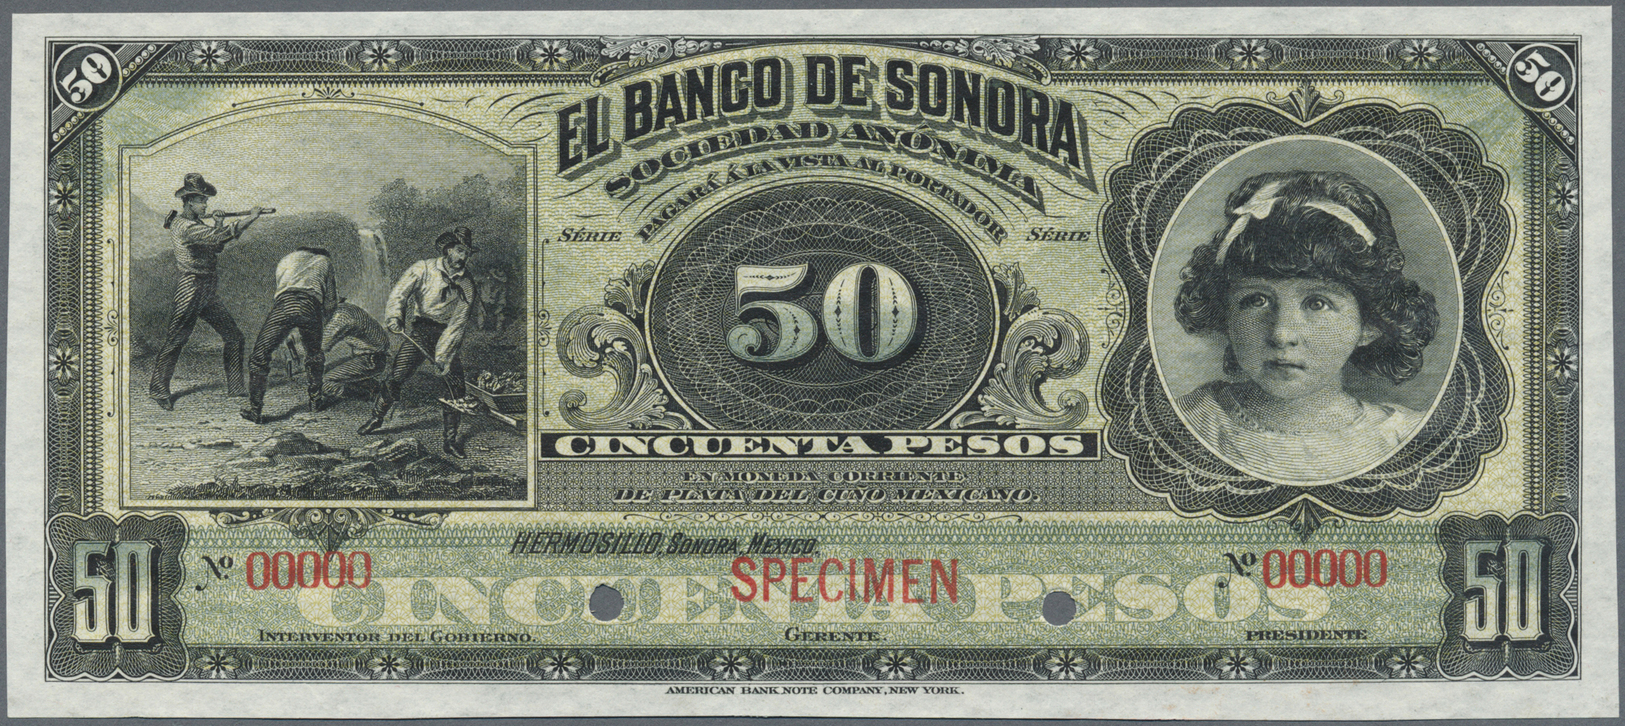 01716 Mexico: El Banco De Sonora 50 Pesos 1899-1911 SPECIMEN, P.S422s, Punch Hole Cancellation And Red Overprint Specime - Mexico